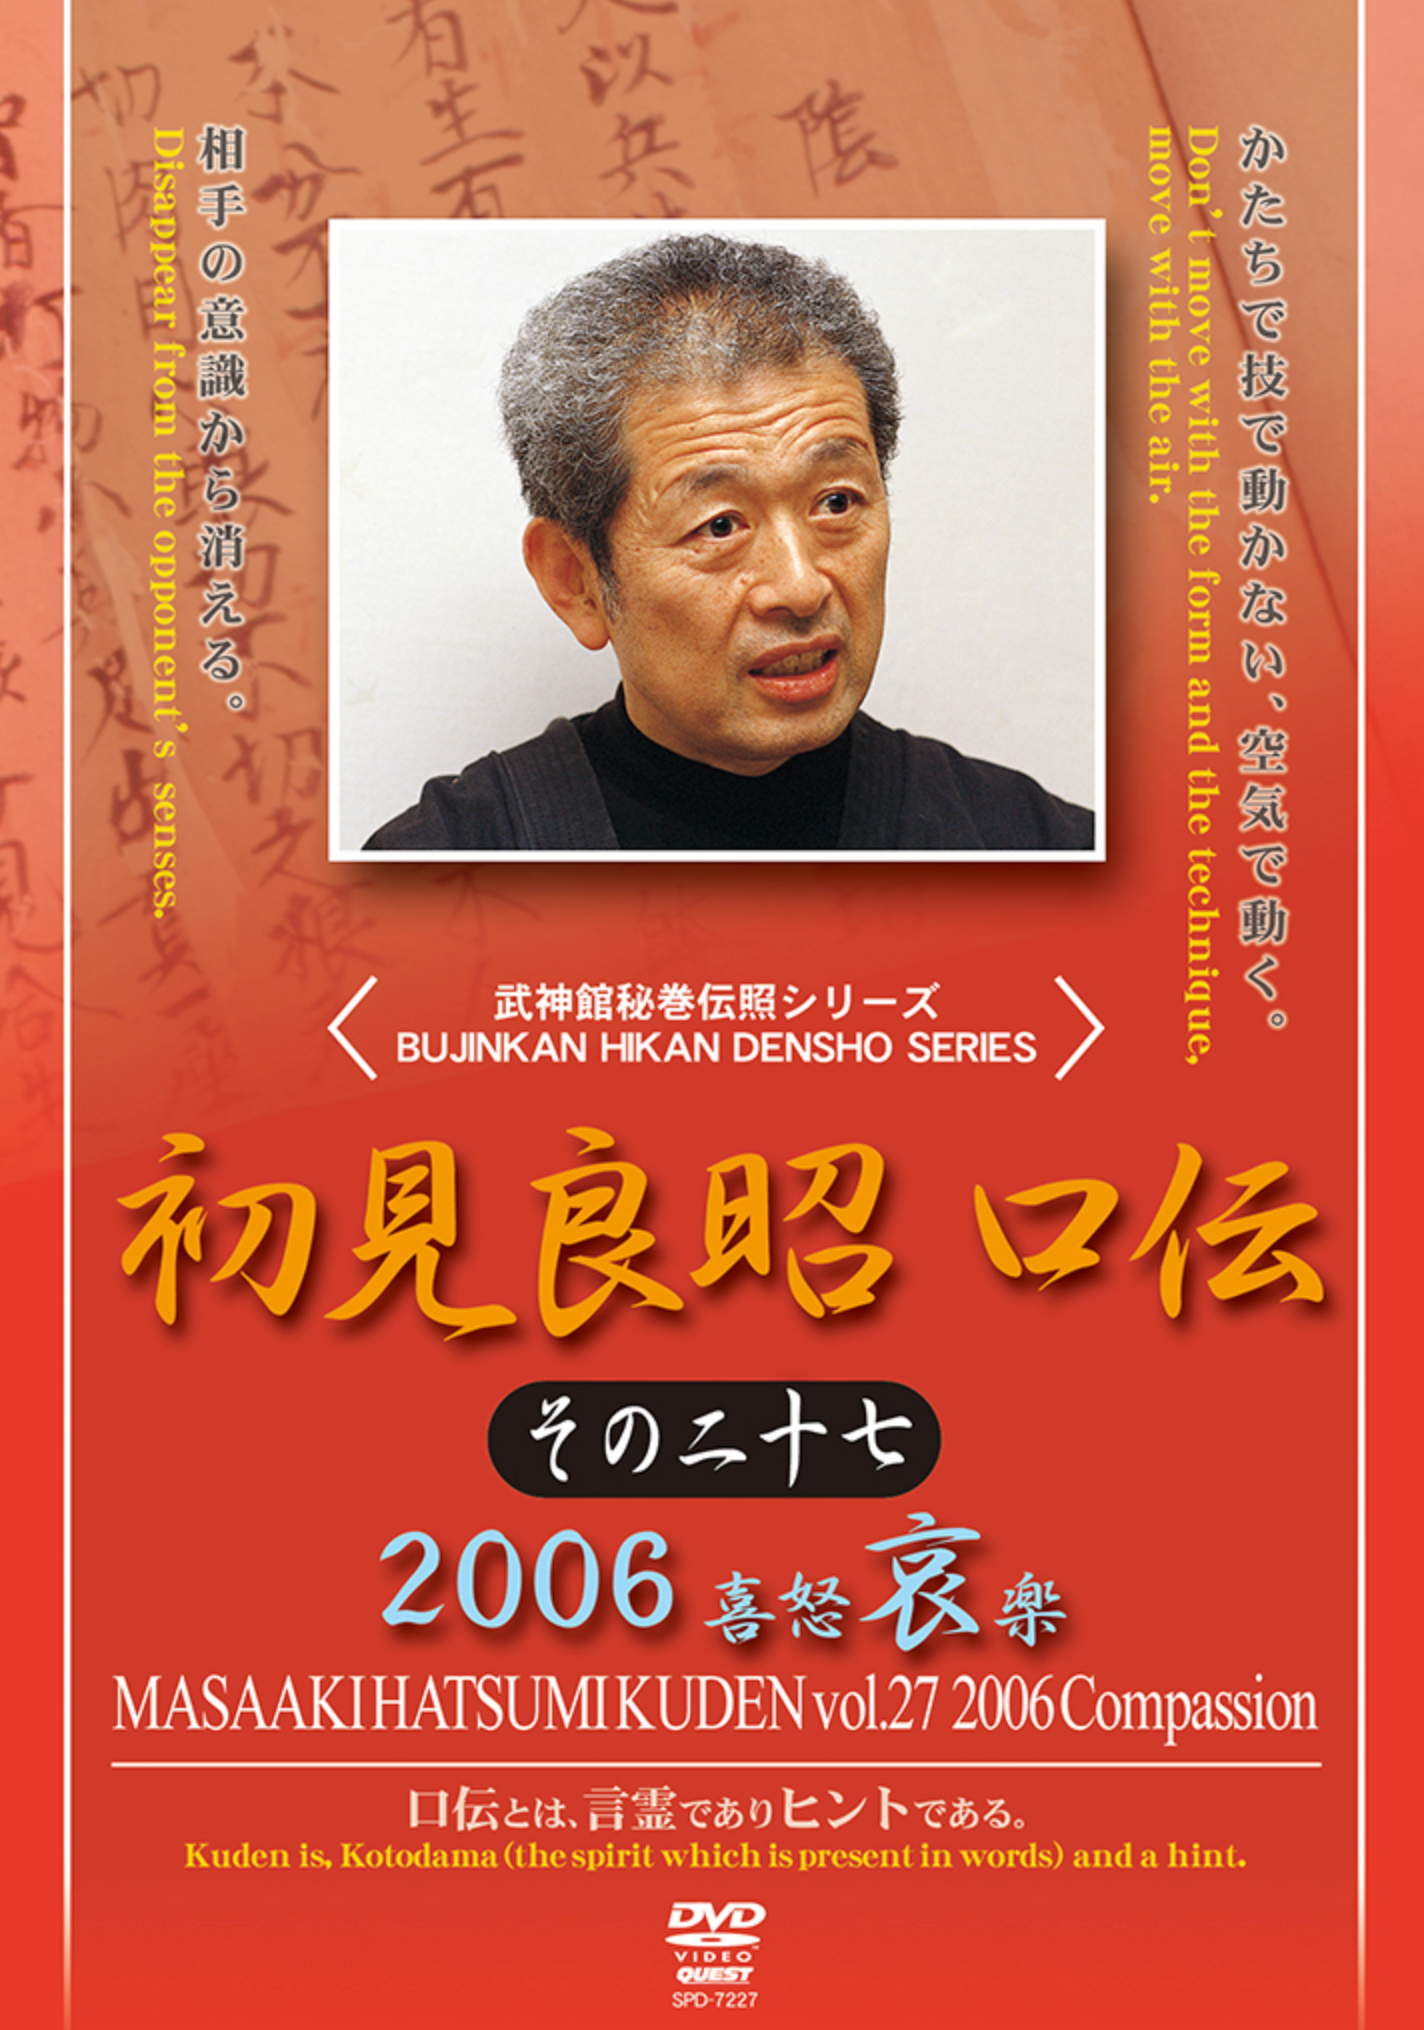 Kuden Vol 27 DVD with Masaaki Hatsumi - Budovideos Inc